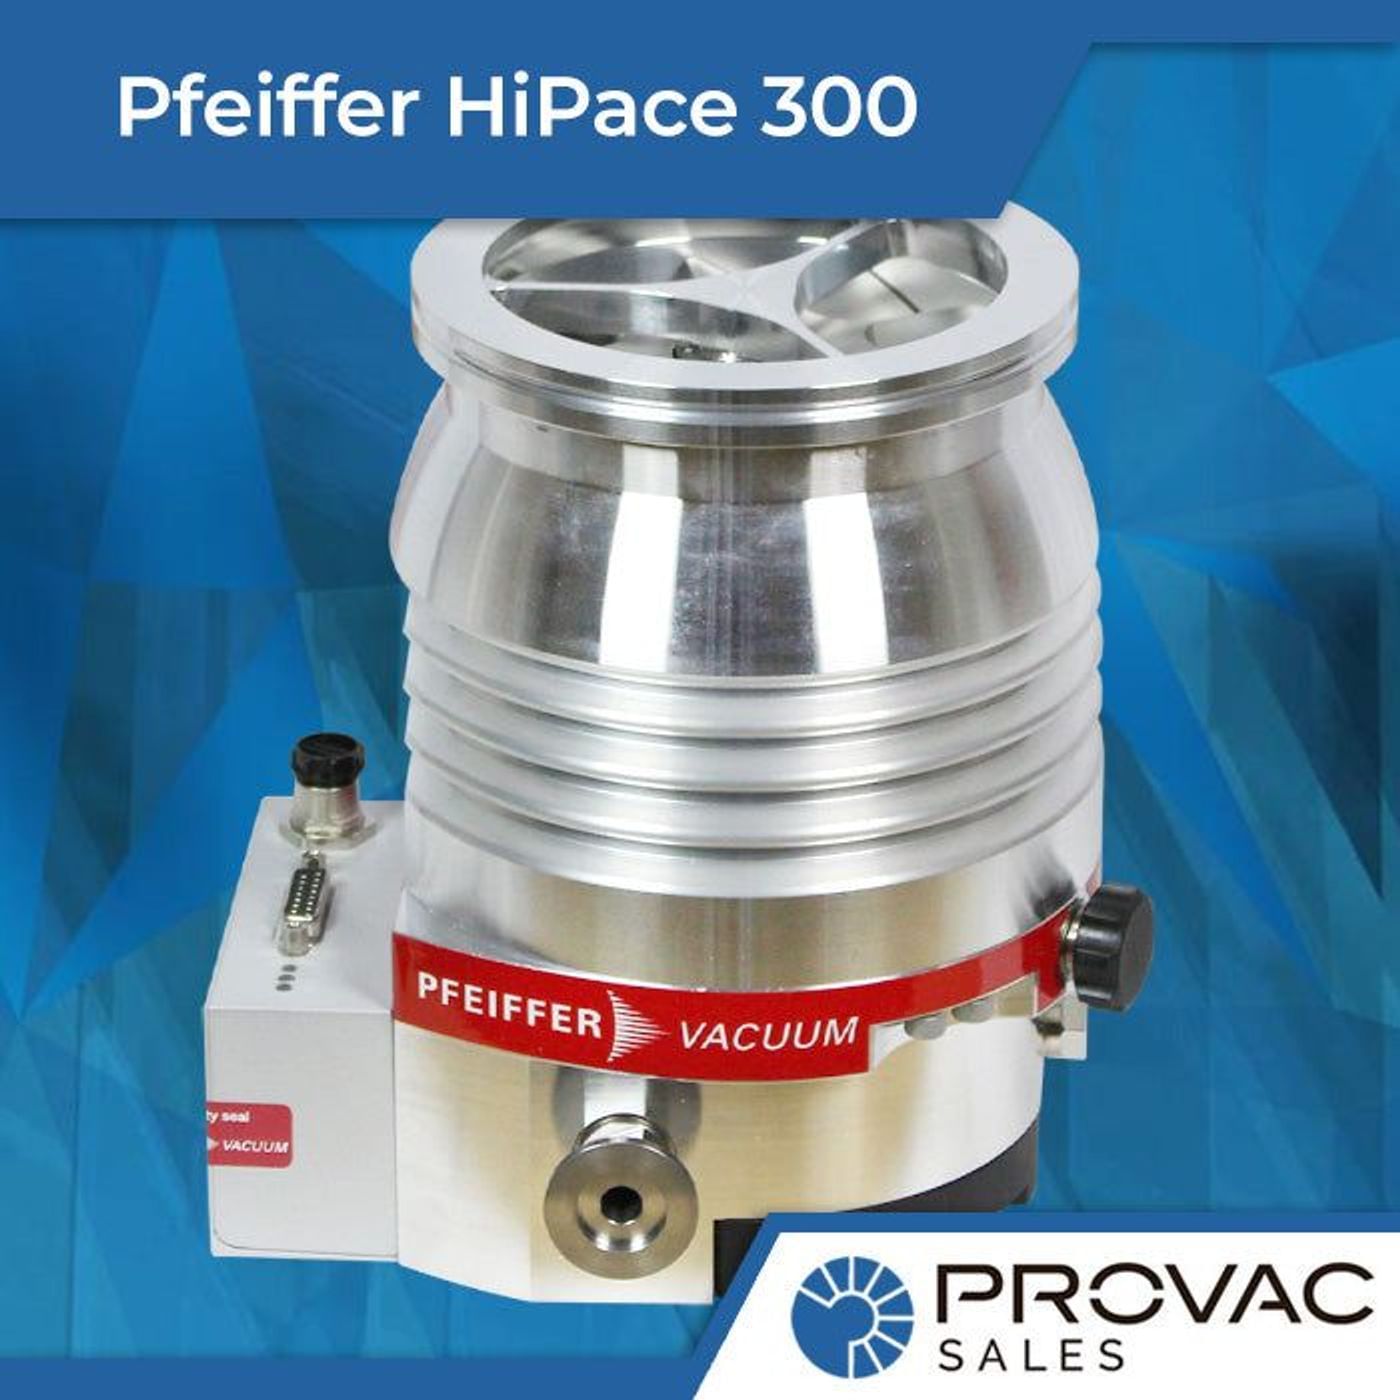 Product Spotlight: Pfeiffer HiPace 300 Turbo Pump